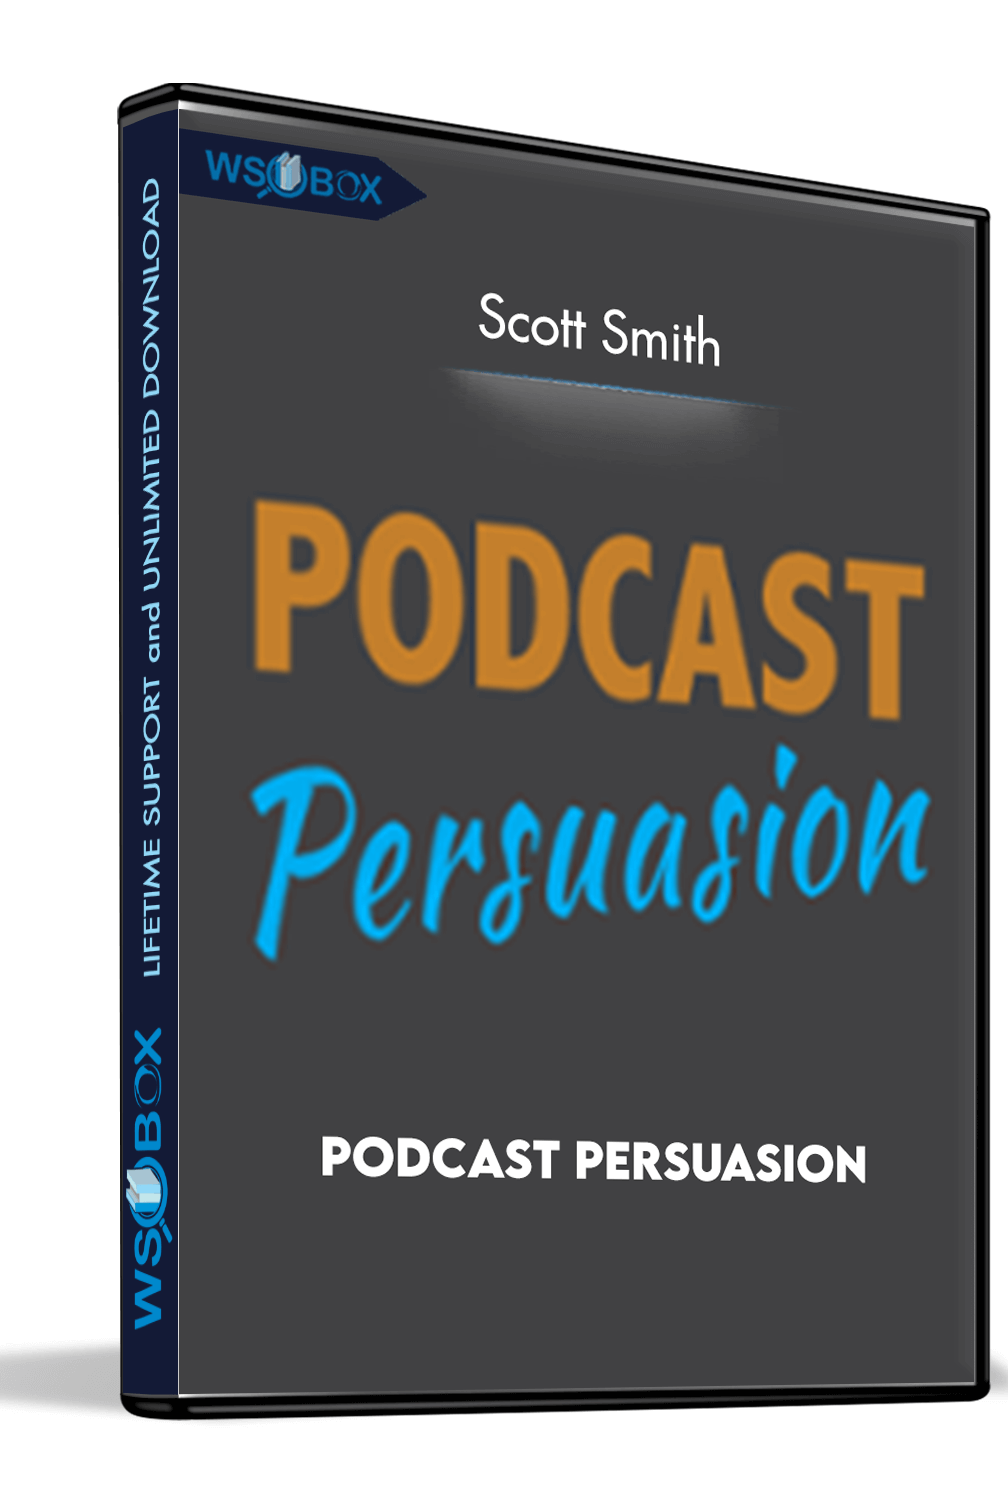 podcast-persuasion-scott-smith